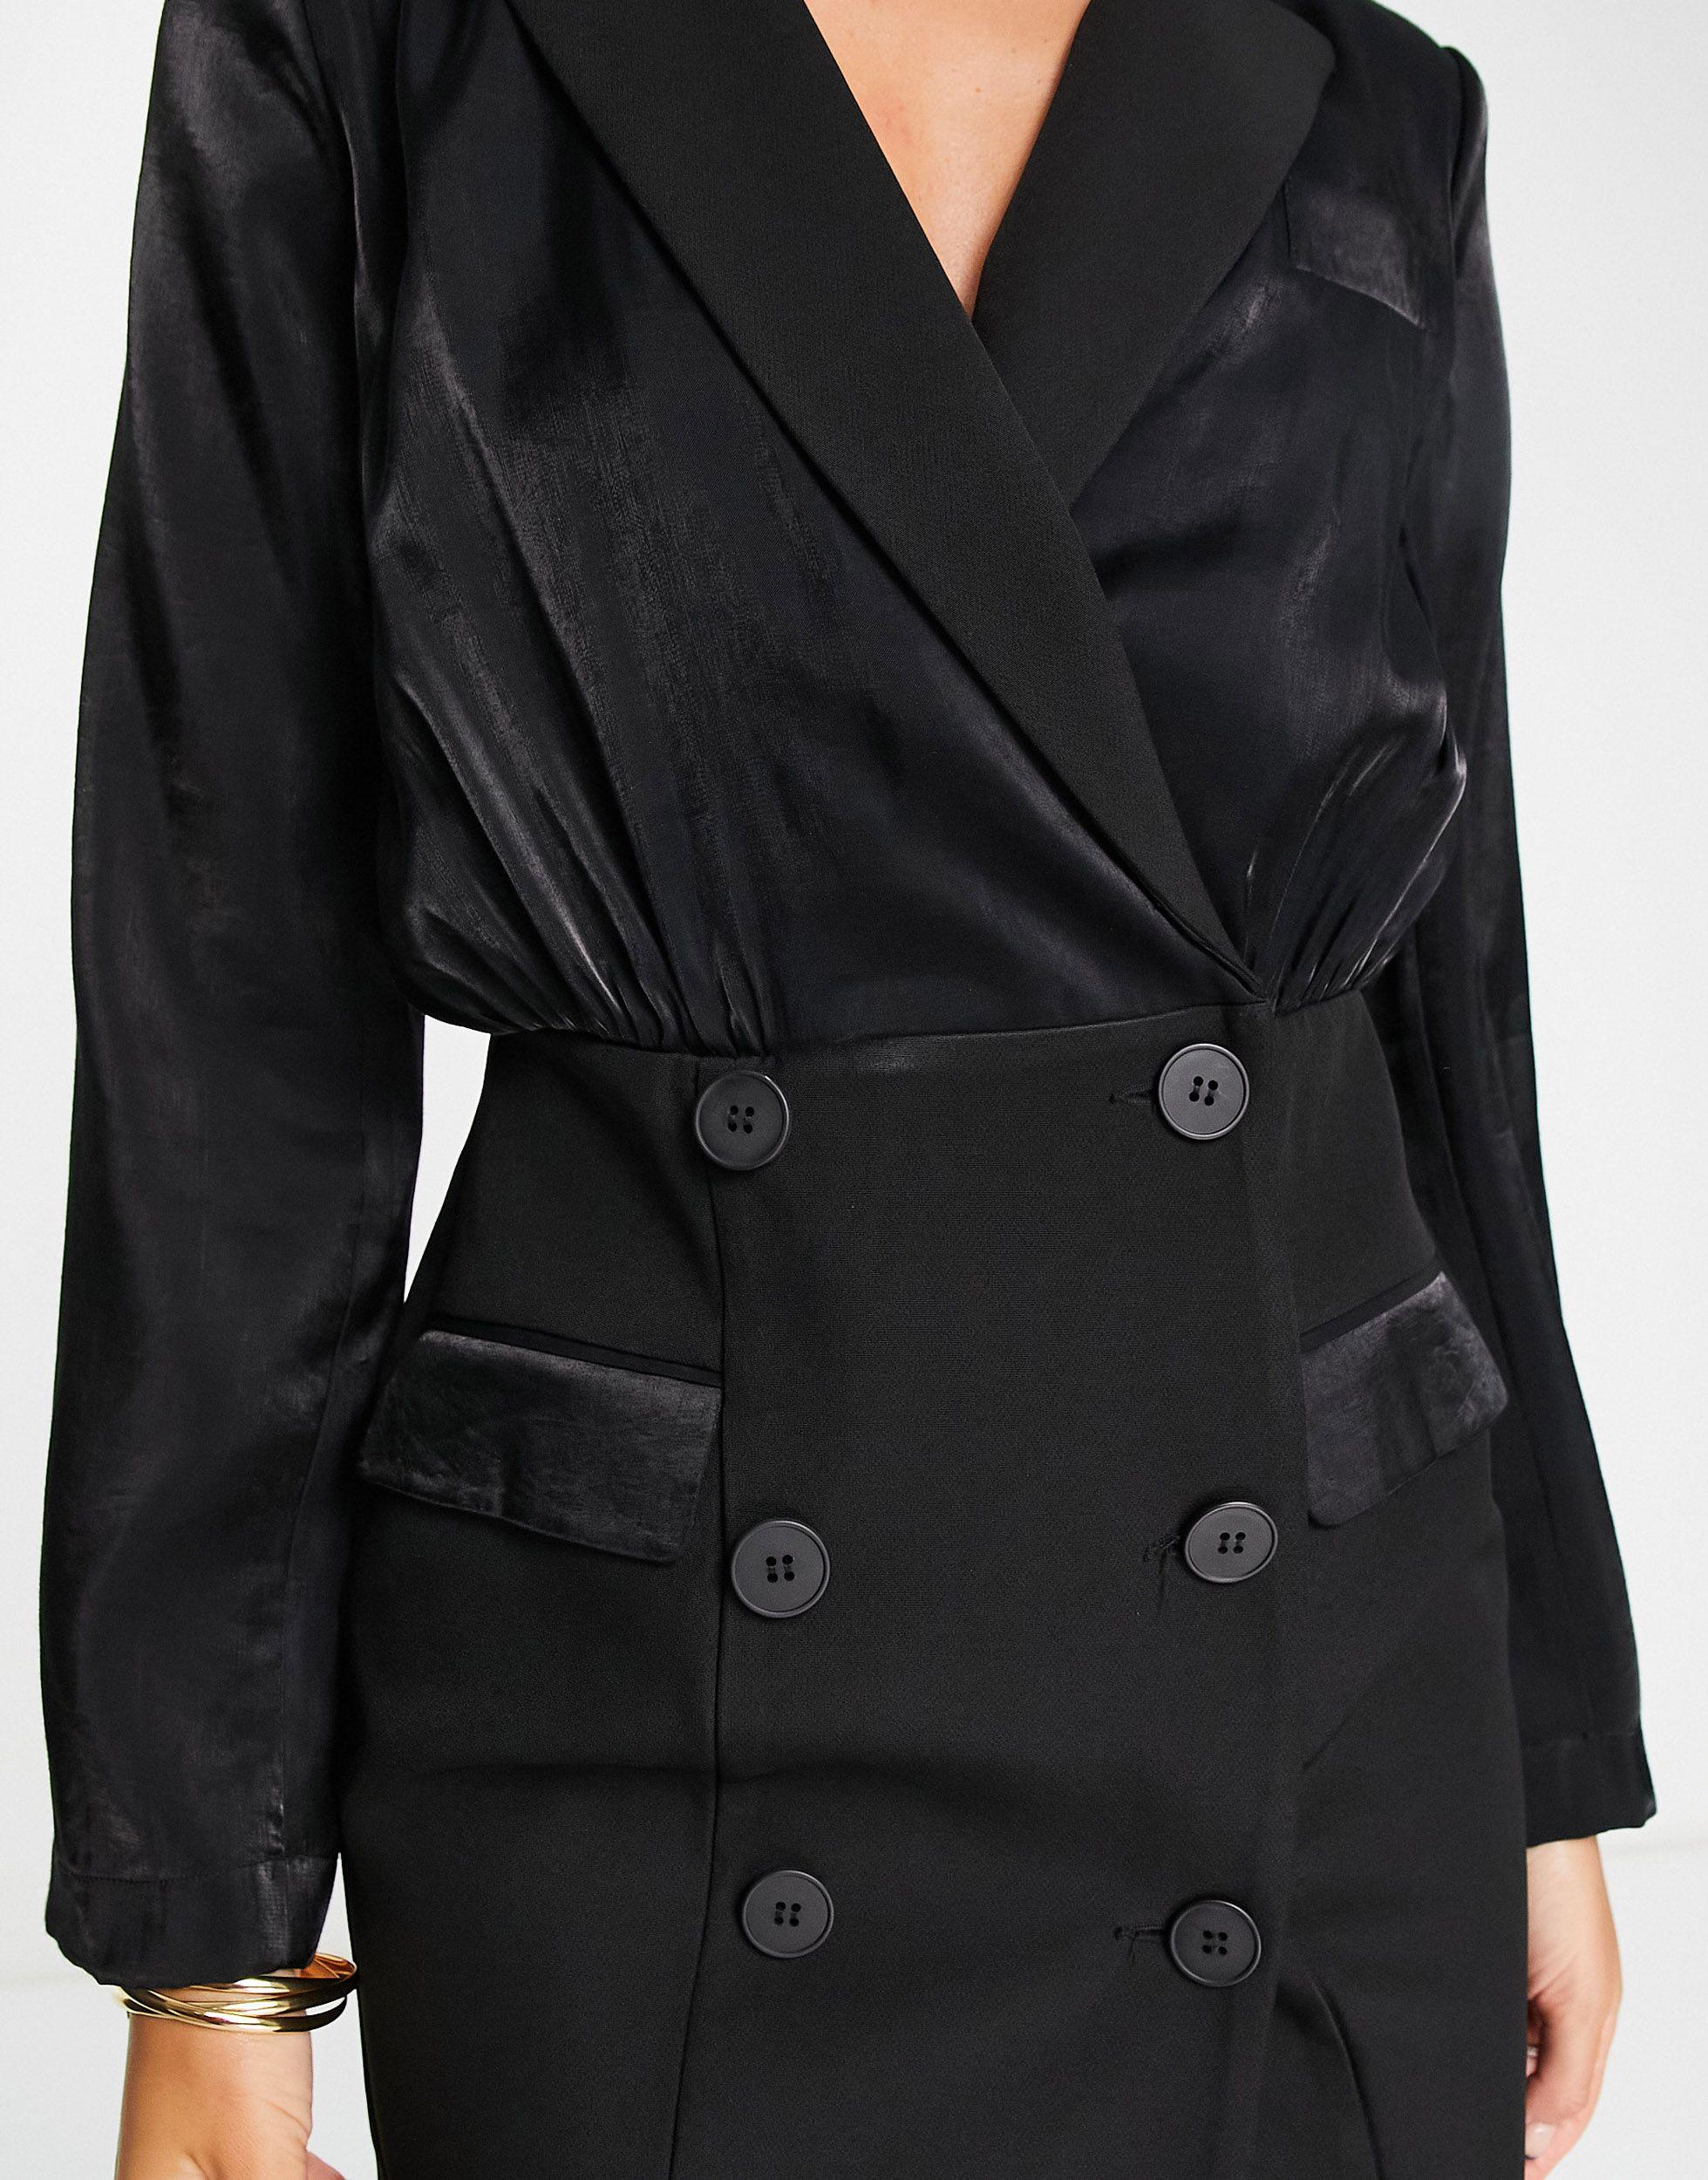 TOPSHOP Mixed Fabric Blazer Dress in Black | Lyst